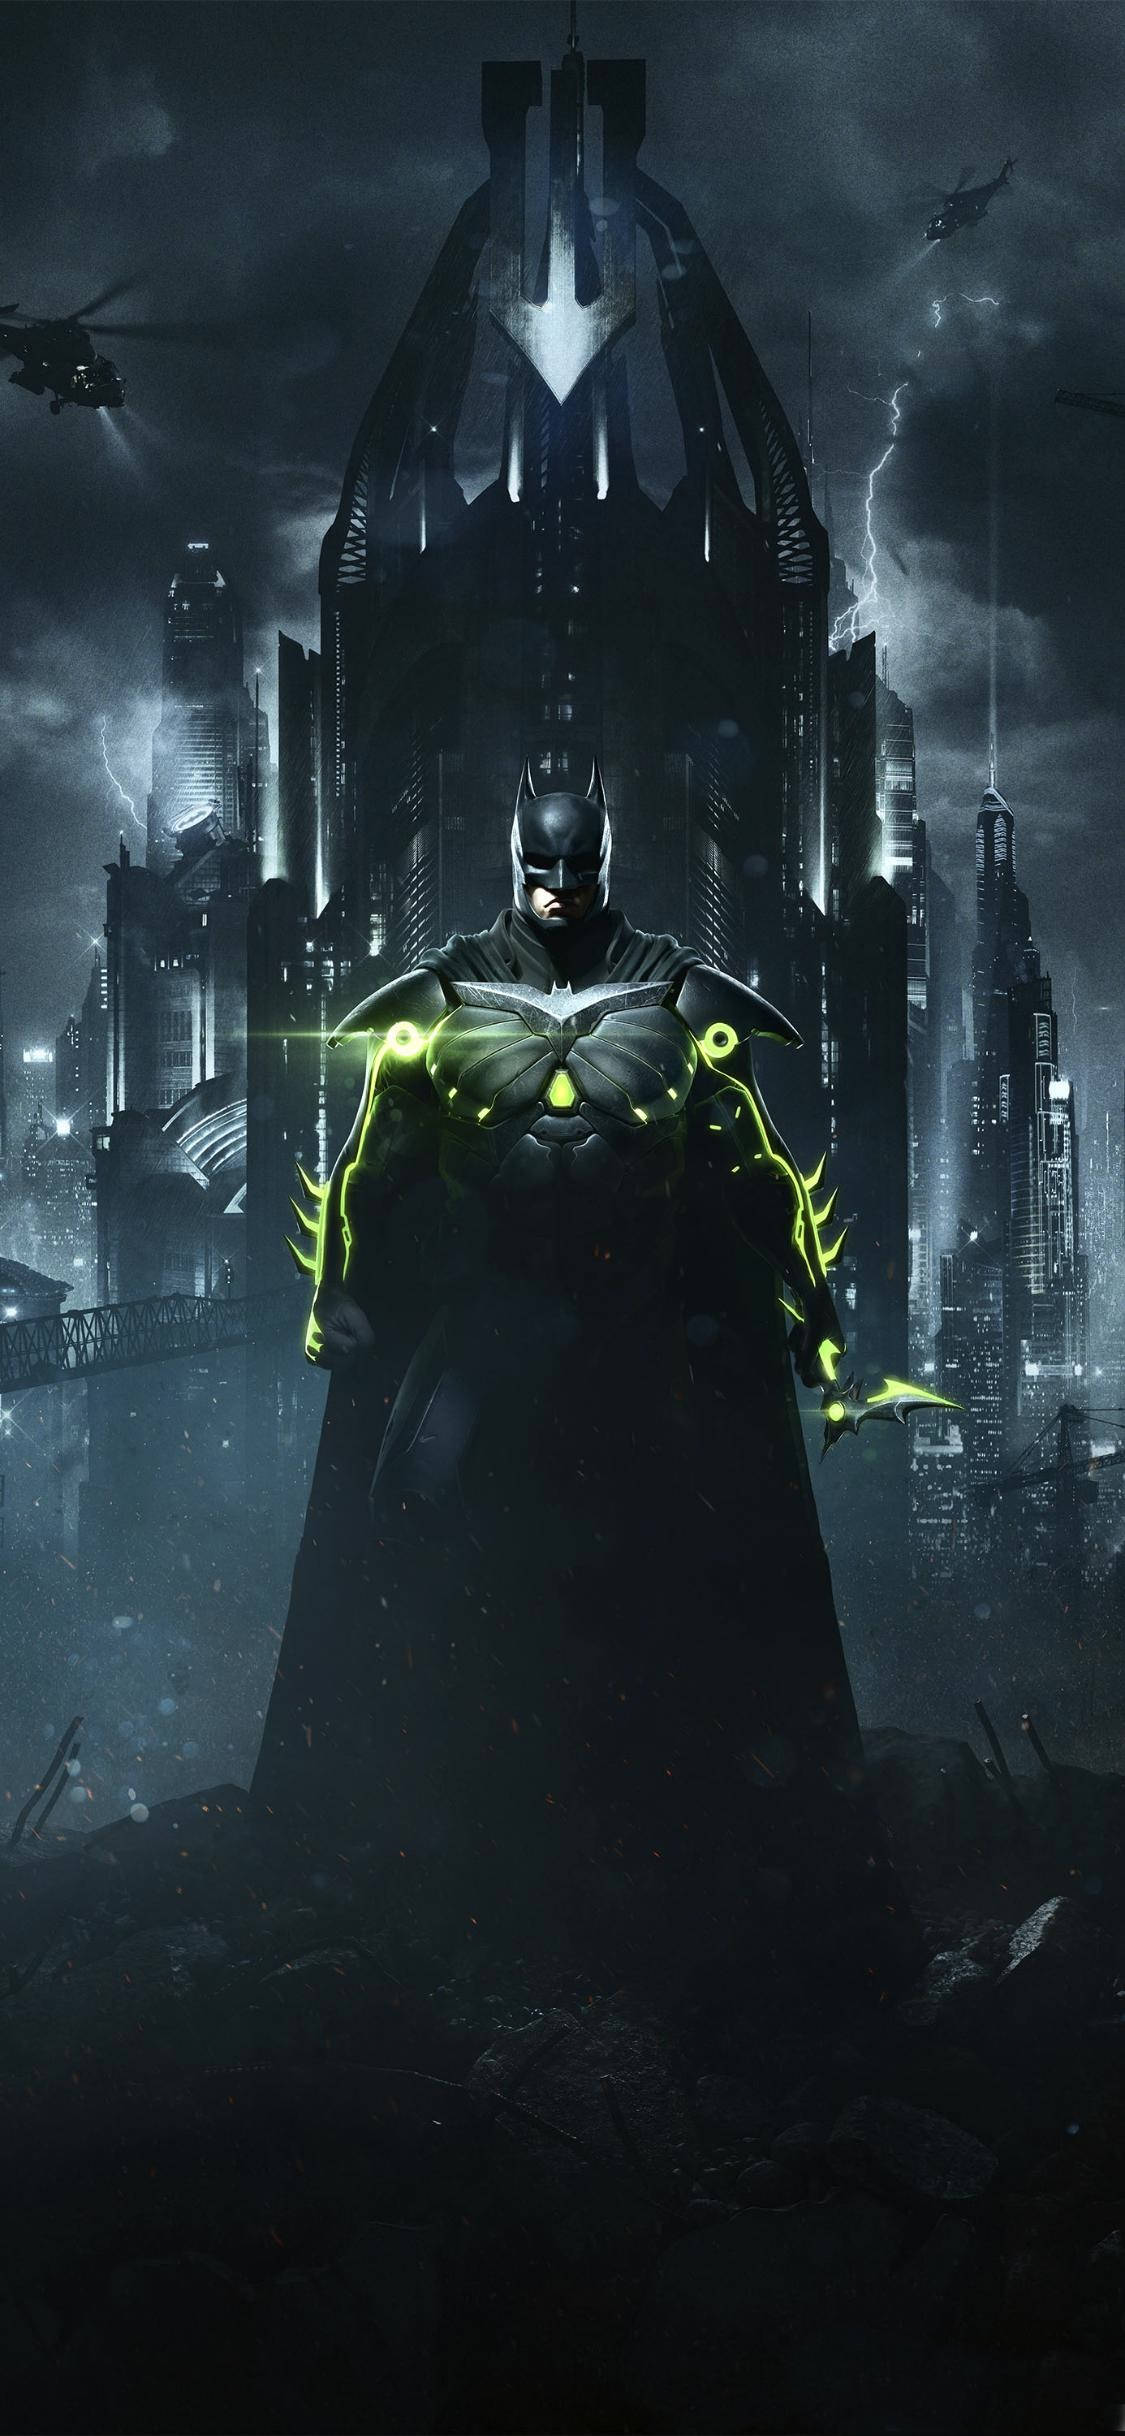 Batman Injustice Scene iPhone X Wallpaper